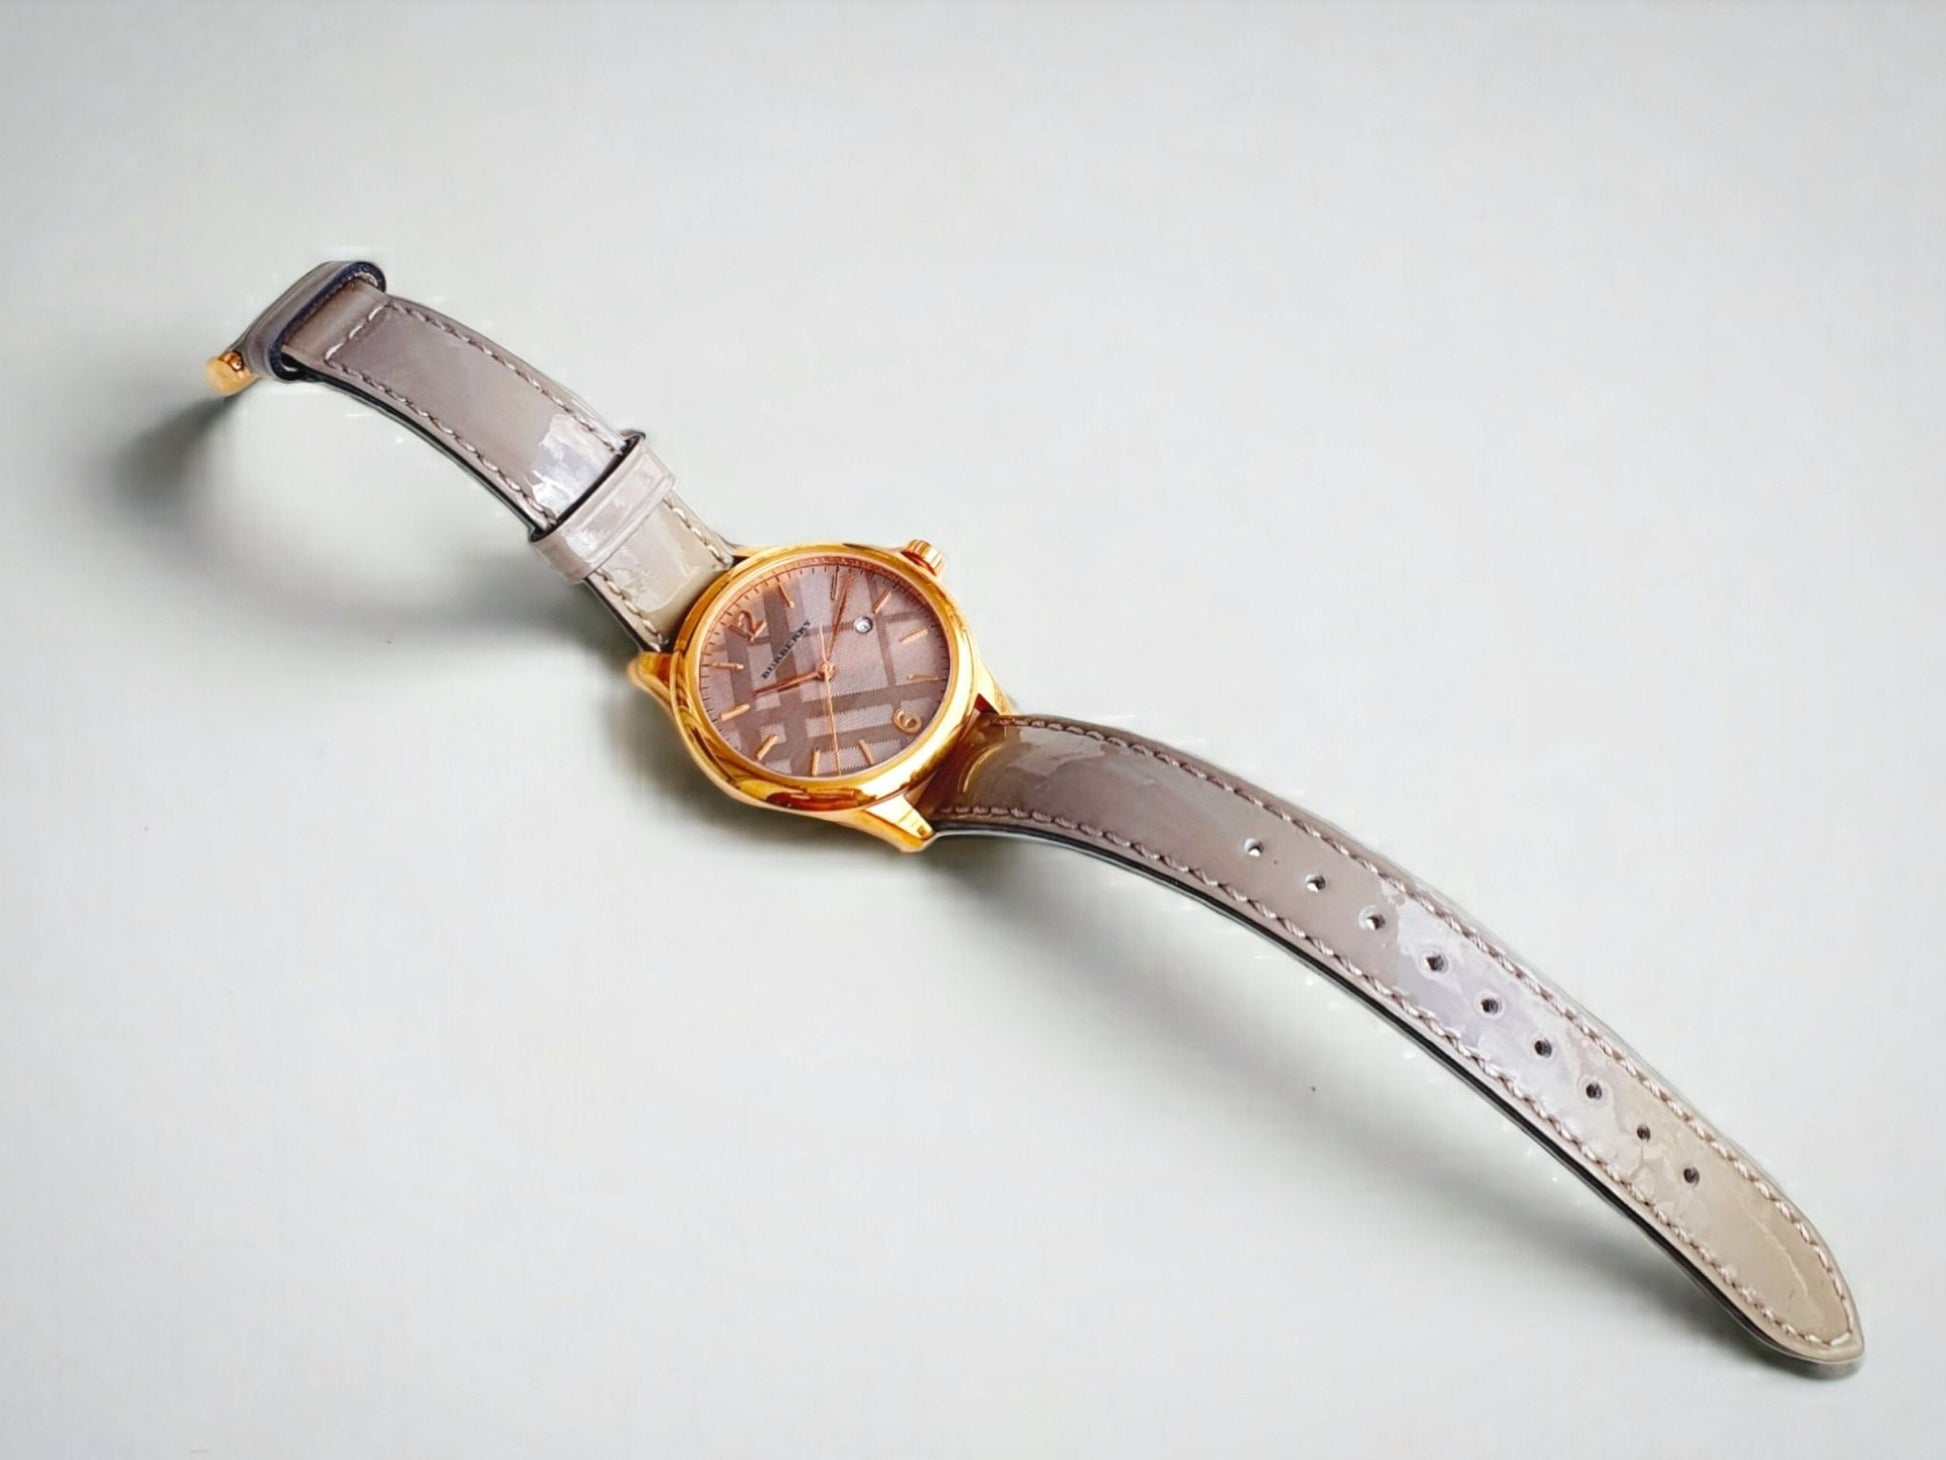 Burberry The Classic Quartz Grey Dial Grey Leather Strap Watch For Women - BU10119